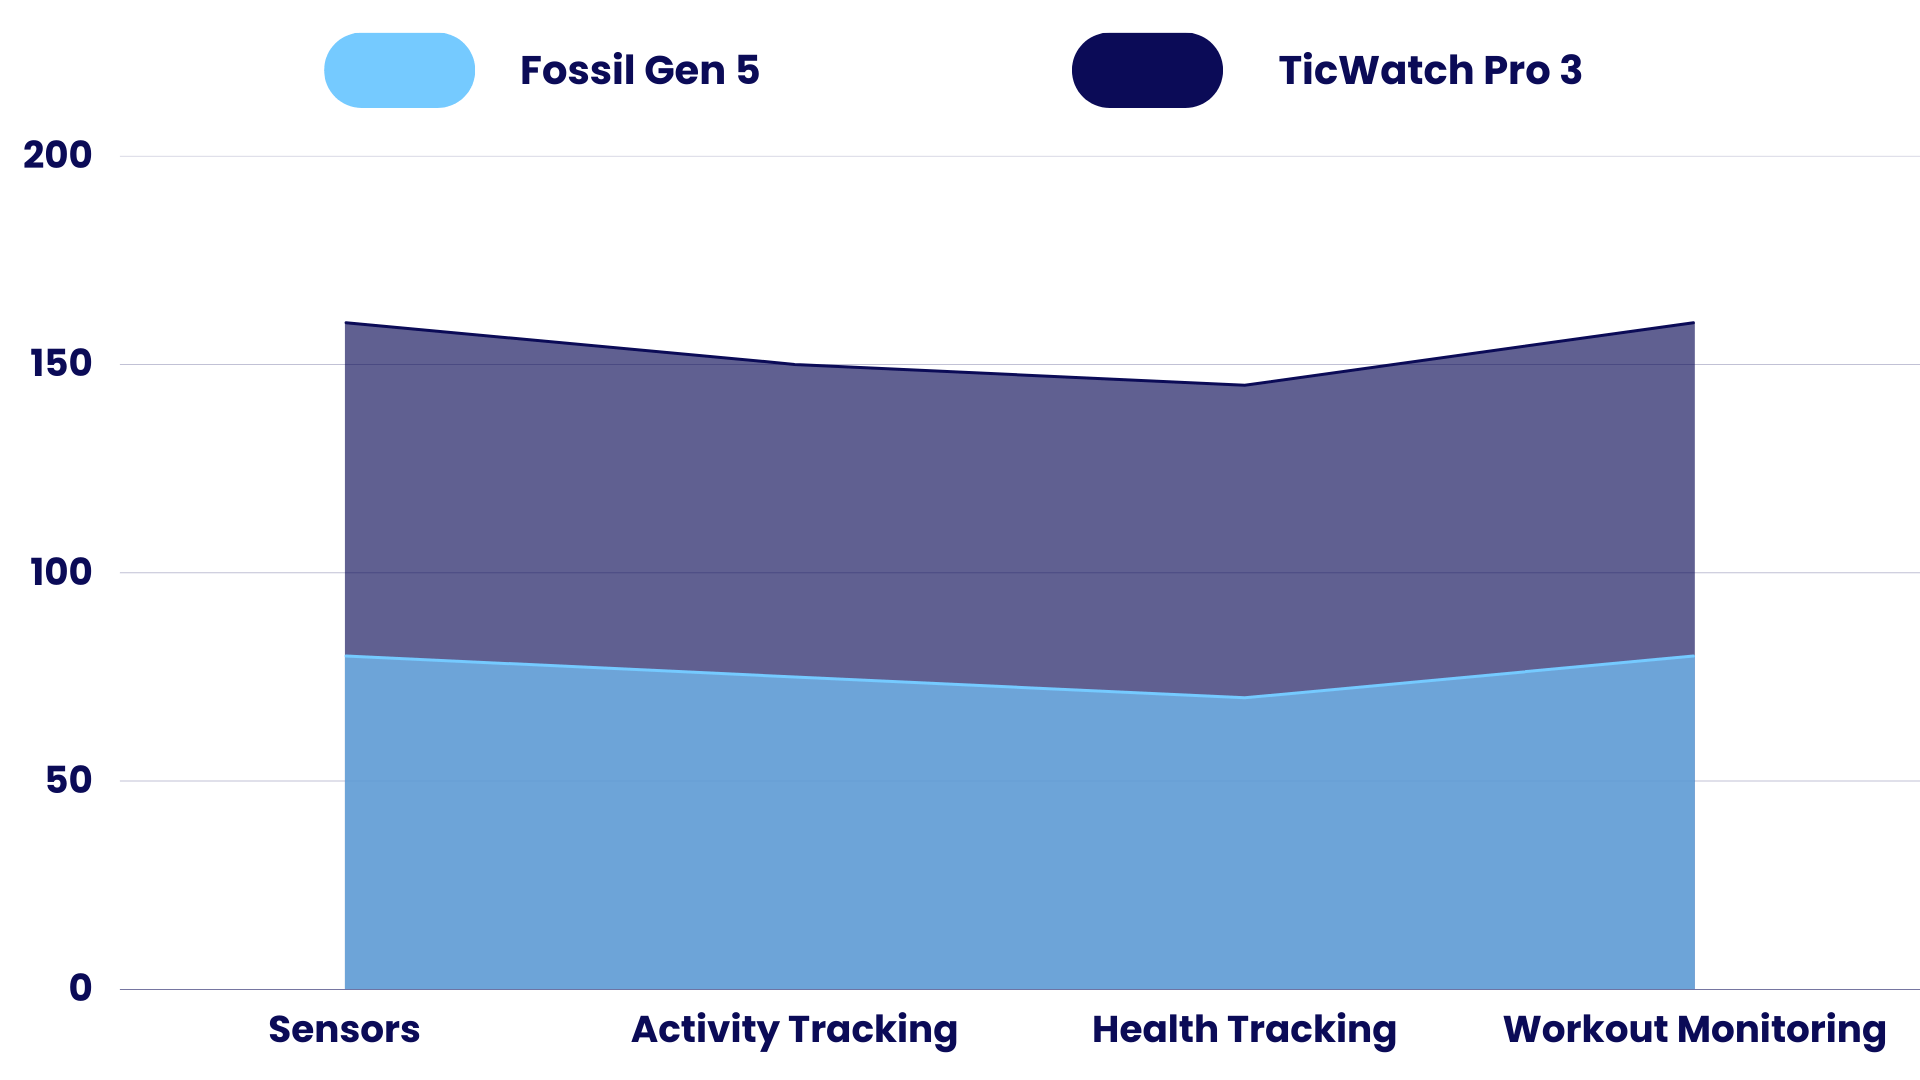 Sensors Comparison of Fossil Gen 5 vs TicWatch Pro 3